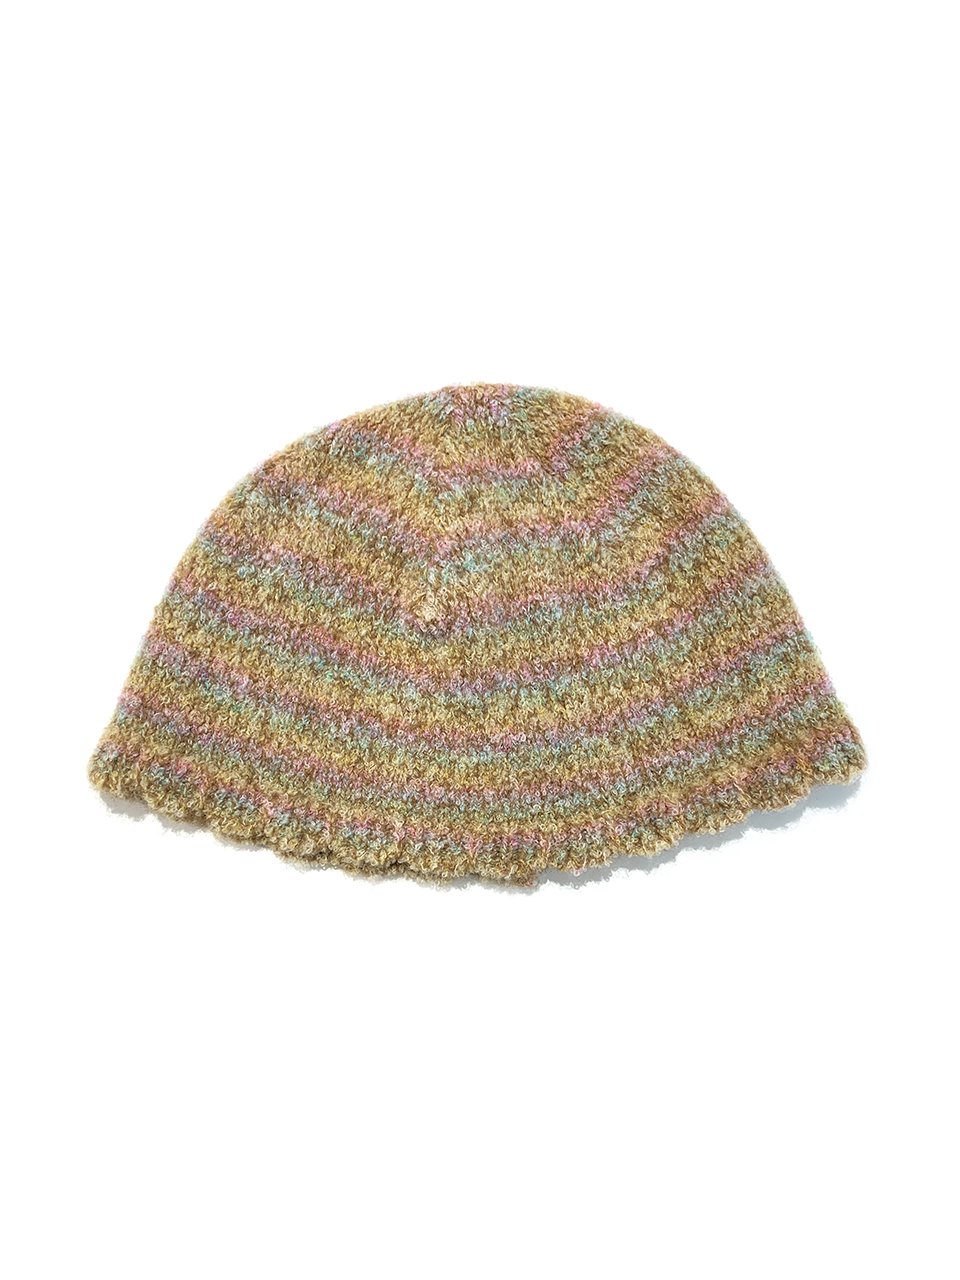 rainbow knit hat